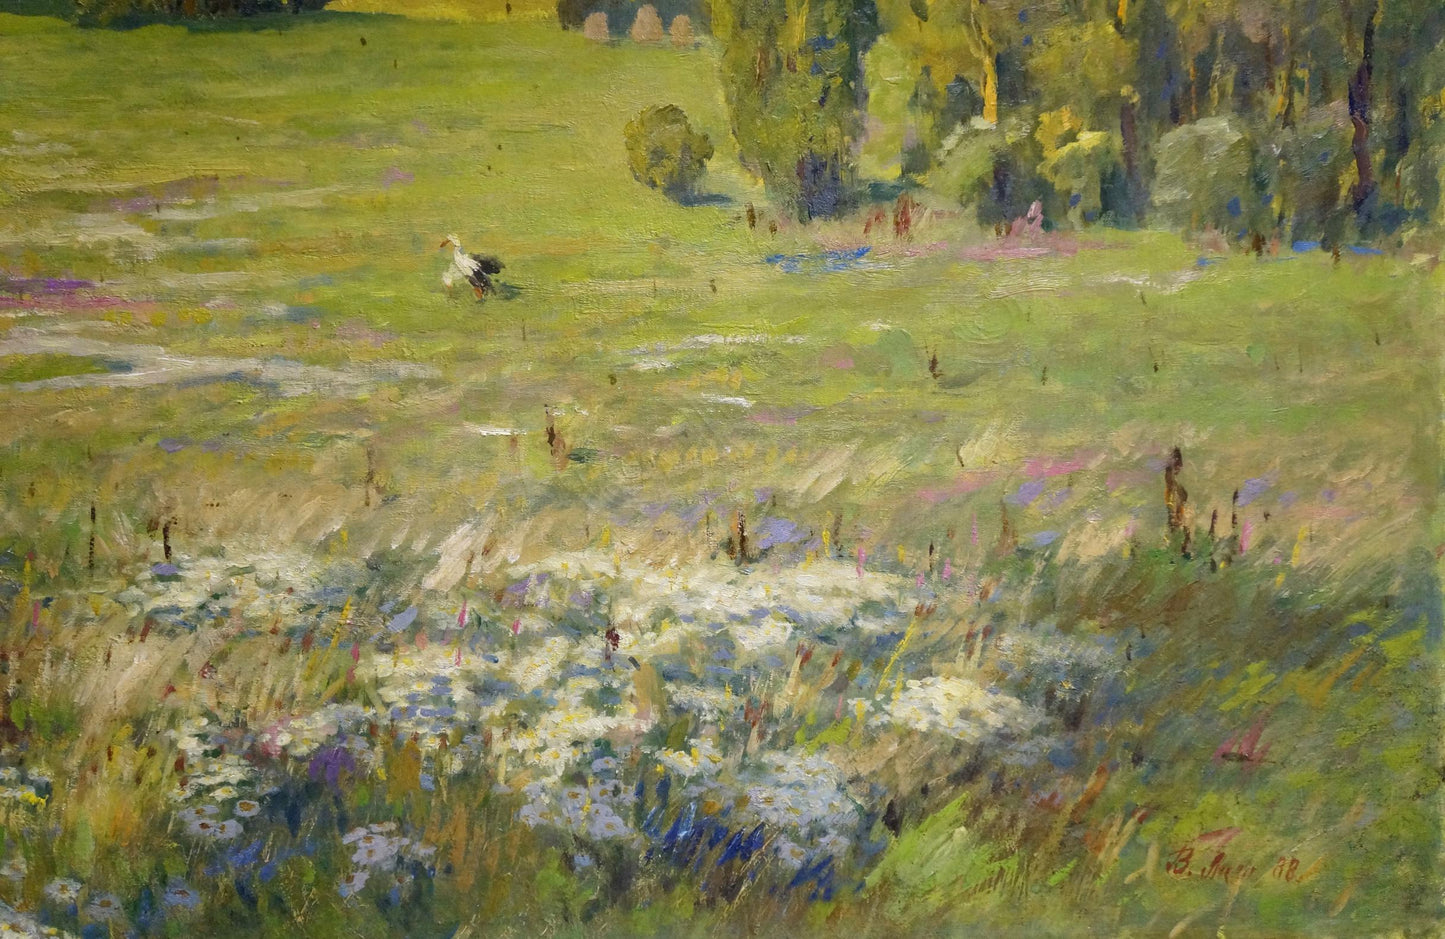 Victor Ivanovich Lapin's portrayal of natural scenes in oil